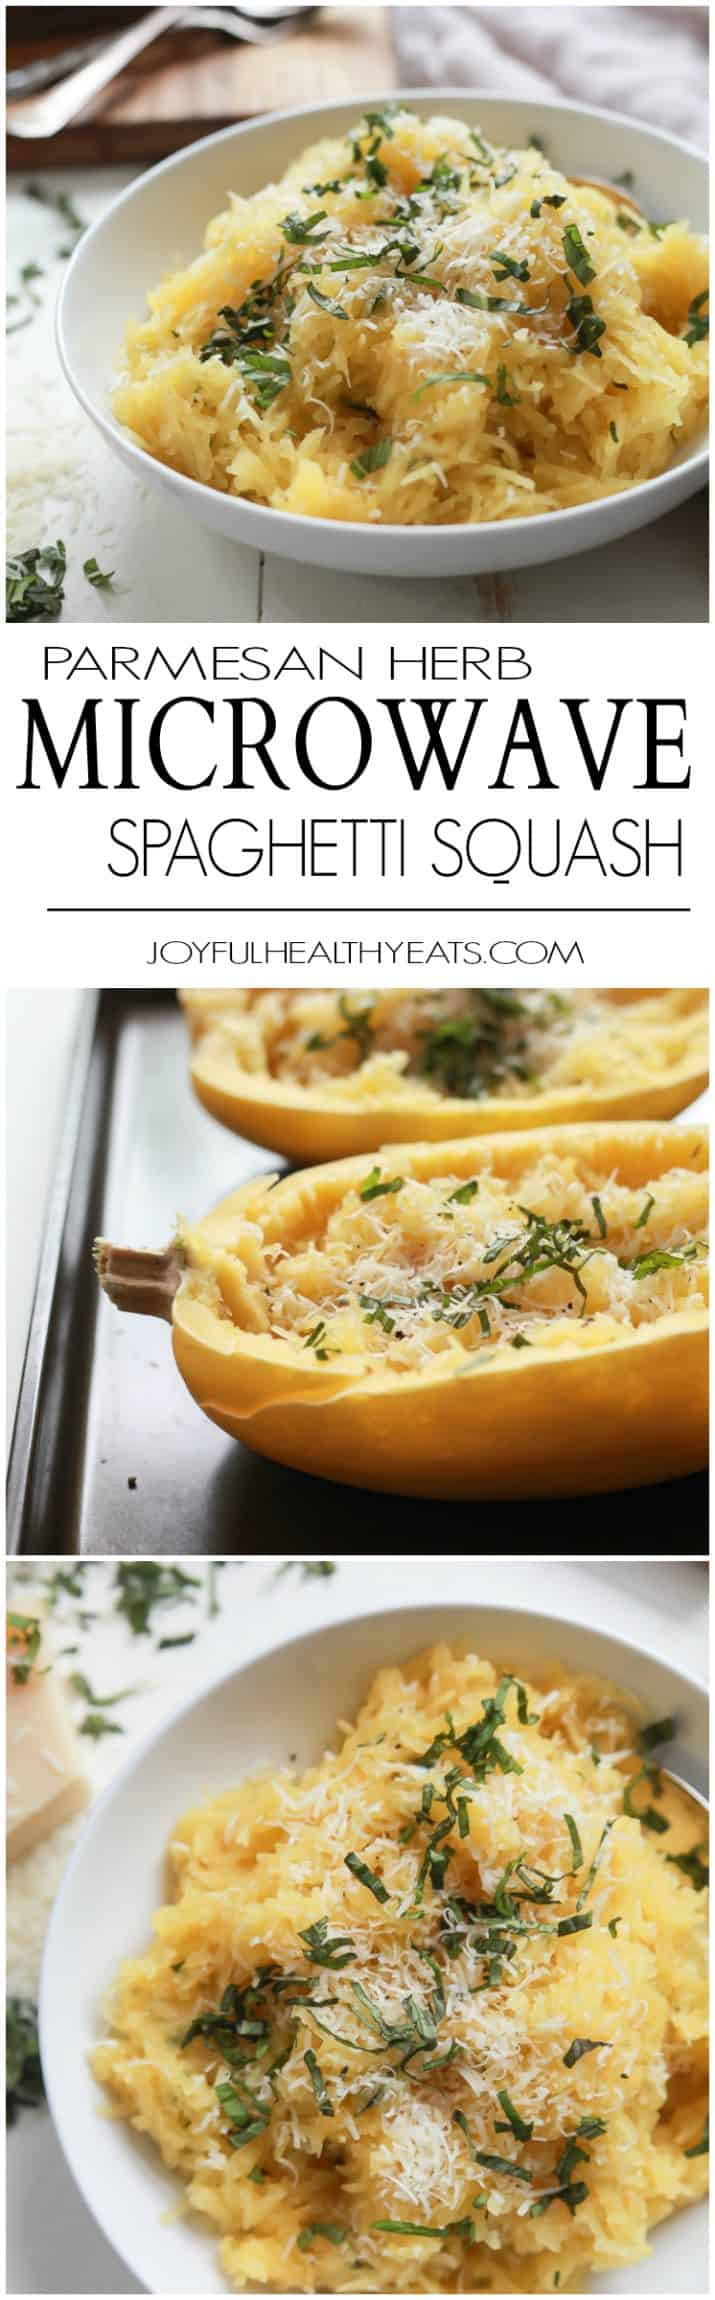 Microwave Spaghetti Squash
 Parmesan Herb Microwave Spaghetti Squash